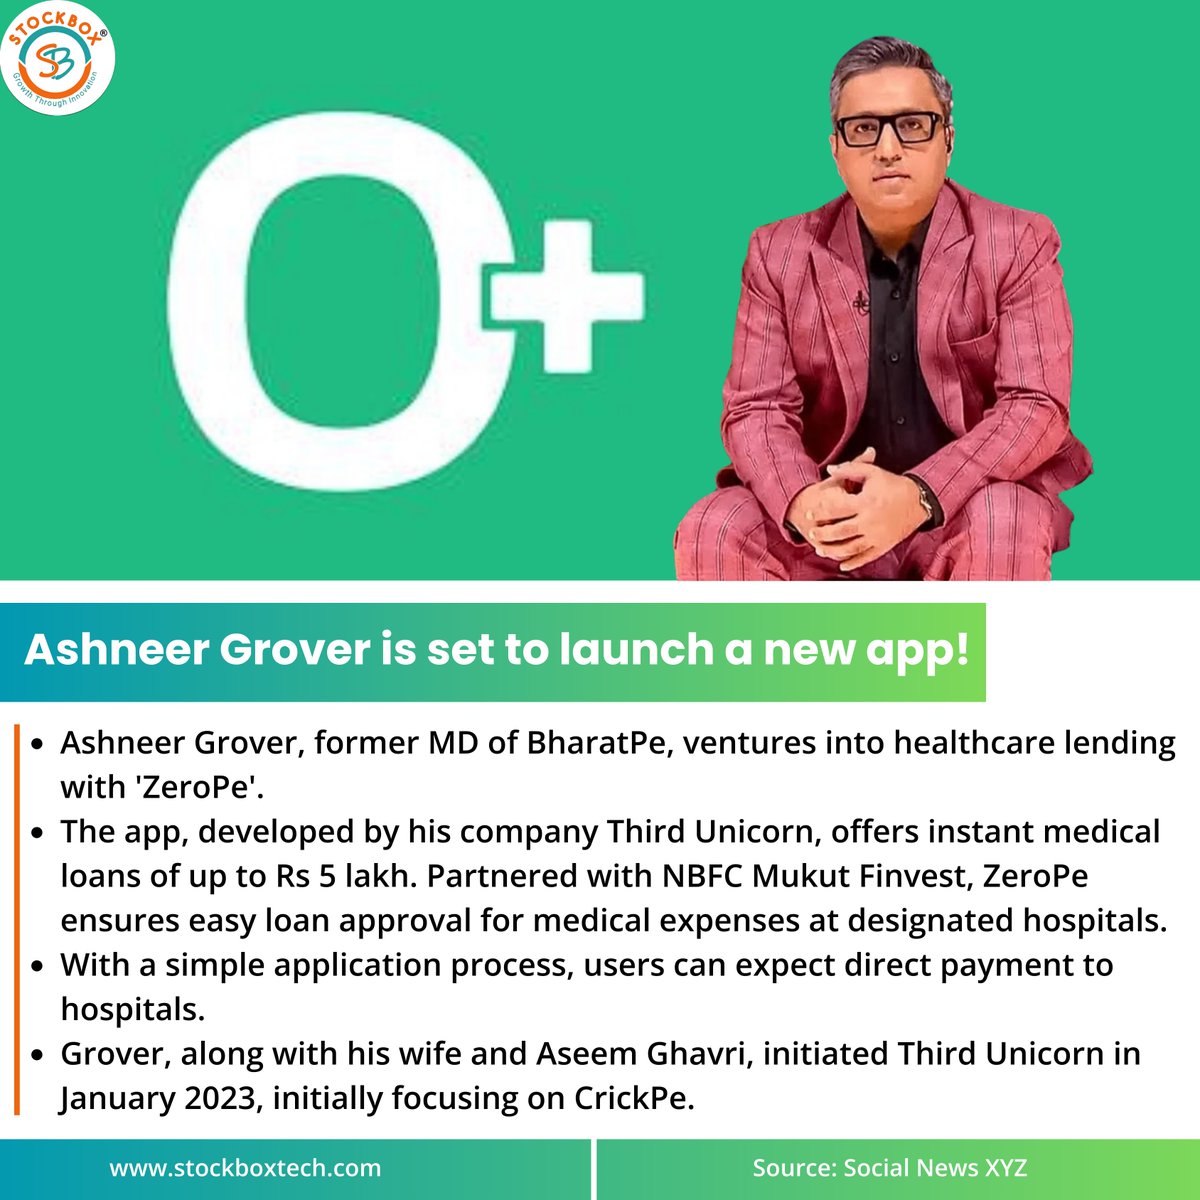 BharatPe co-founder Ashneer Grover set to launch app for medical loans ‘ZeroPe’  #StockBoxTech    #ZeroPe  #ashneergrover